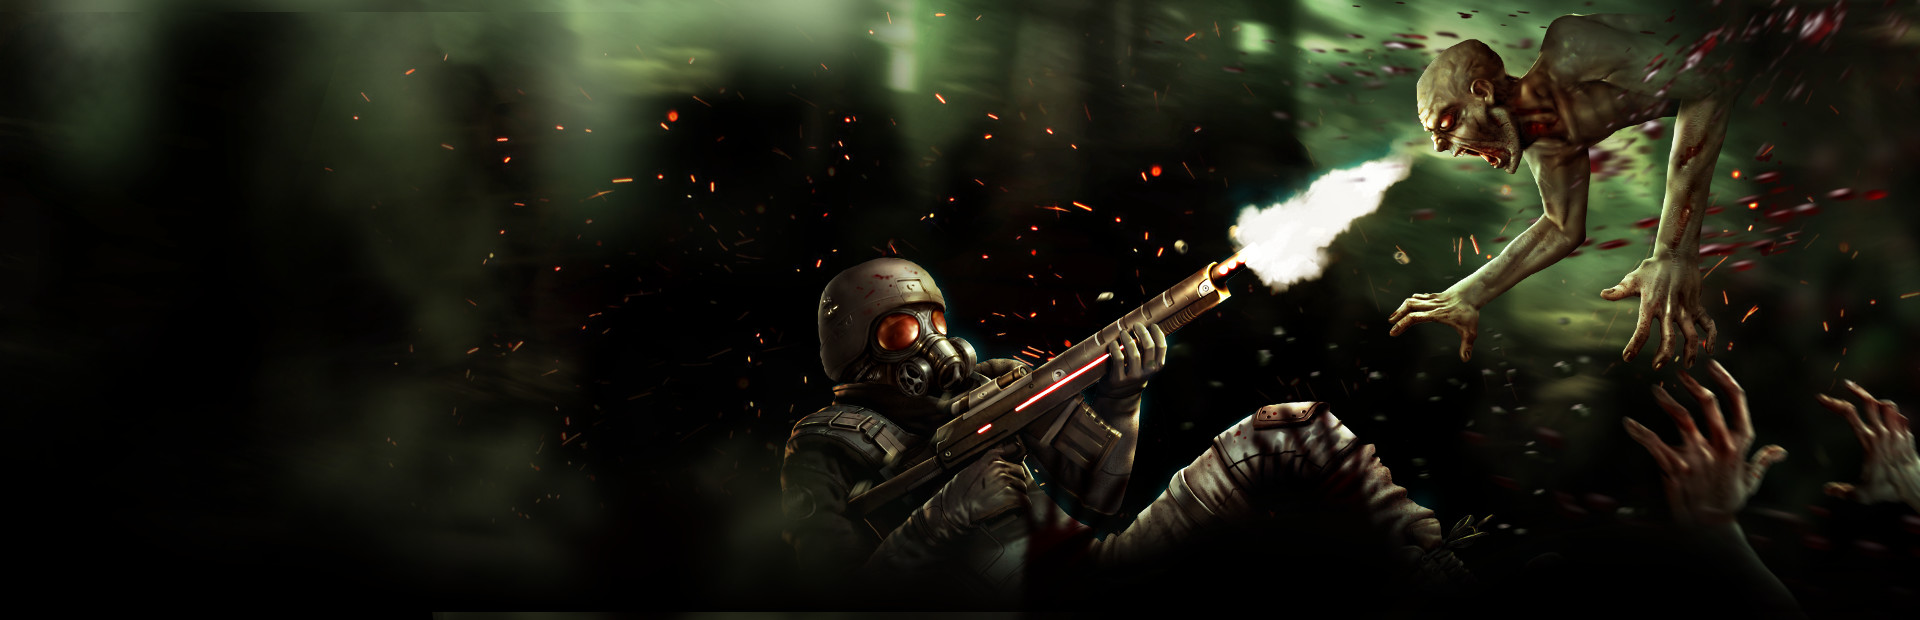 SAS: Zombie Assault 4 cover image